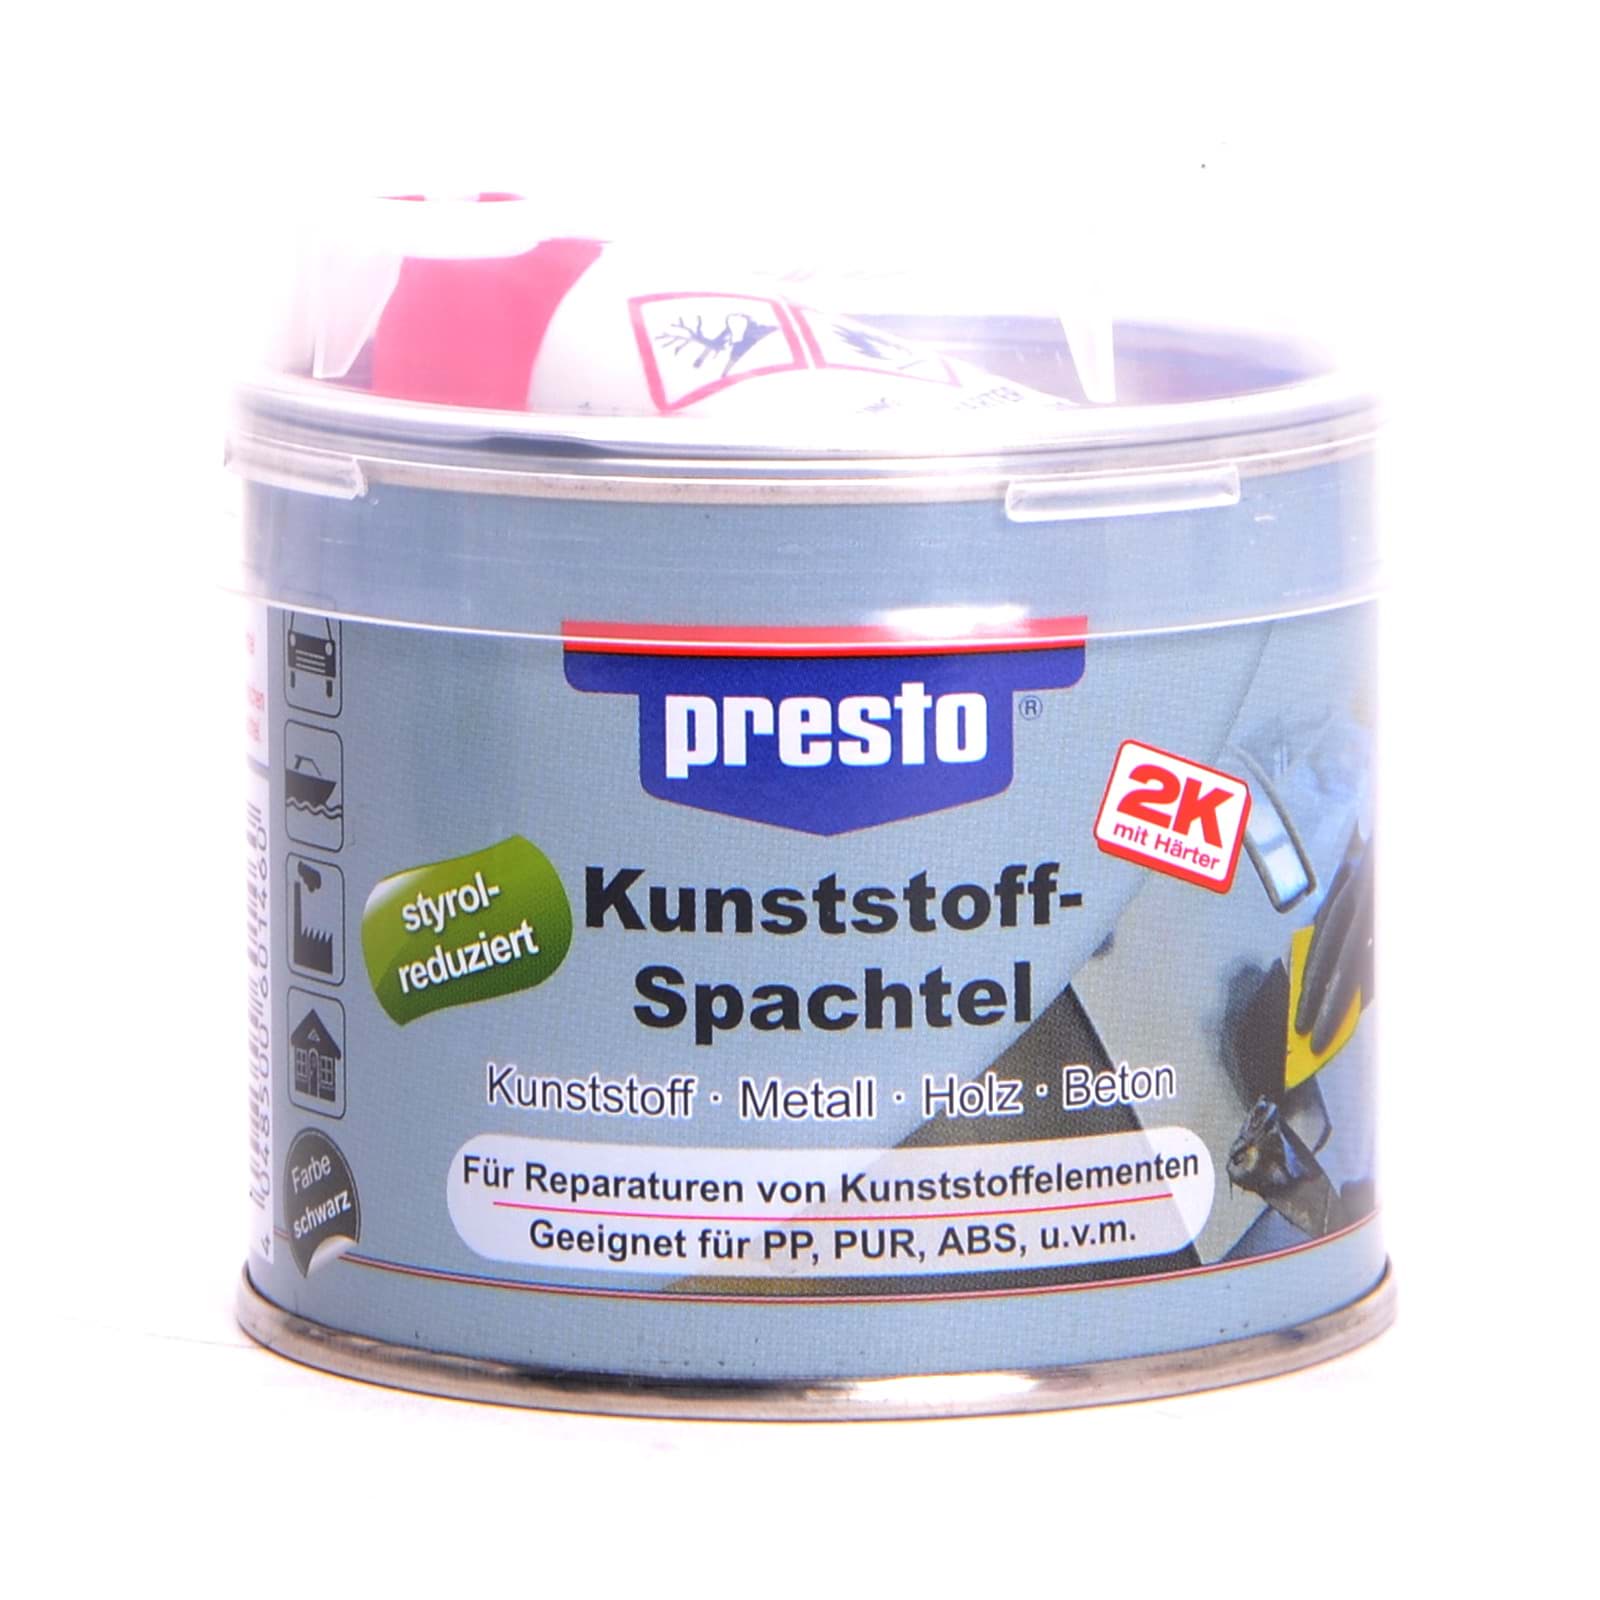 Изображение Presto Kunststoffspachtel Prestolith elastic 250g